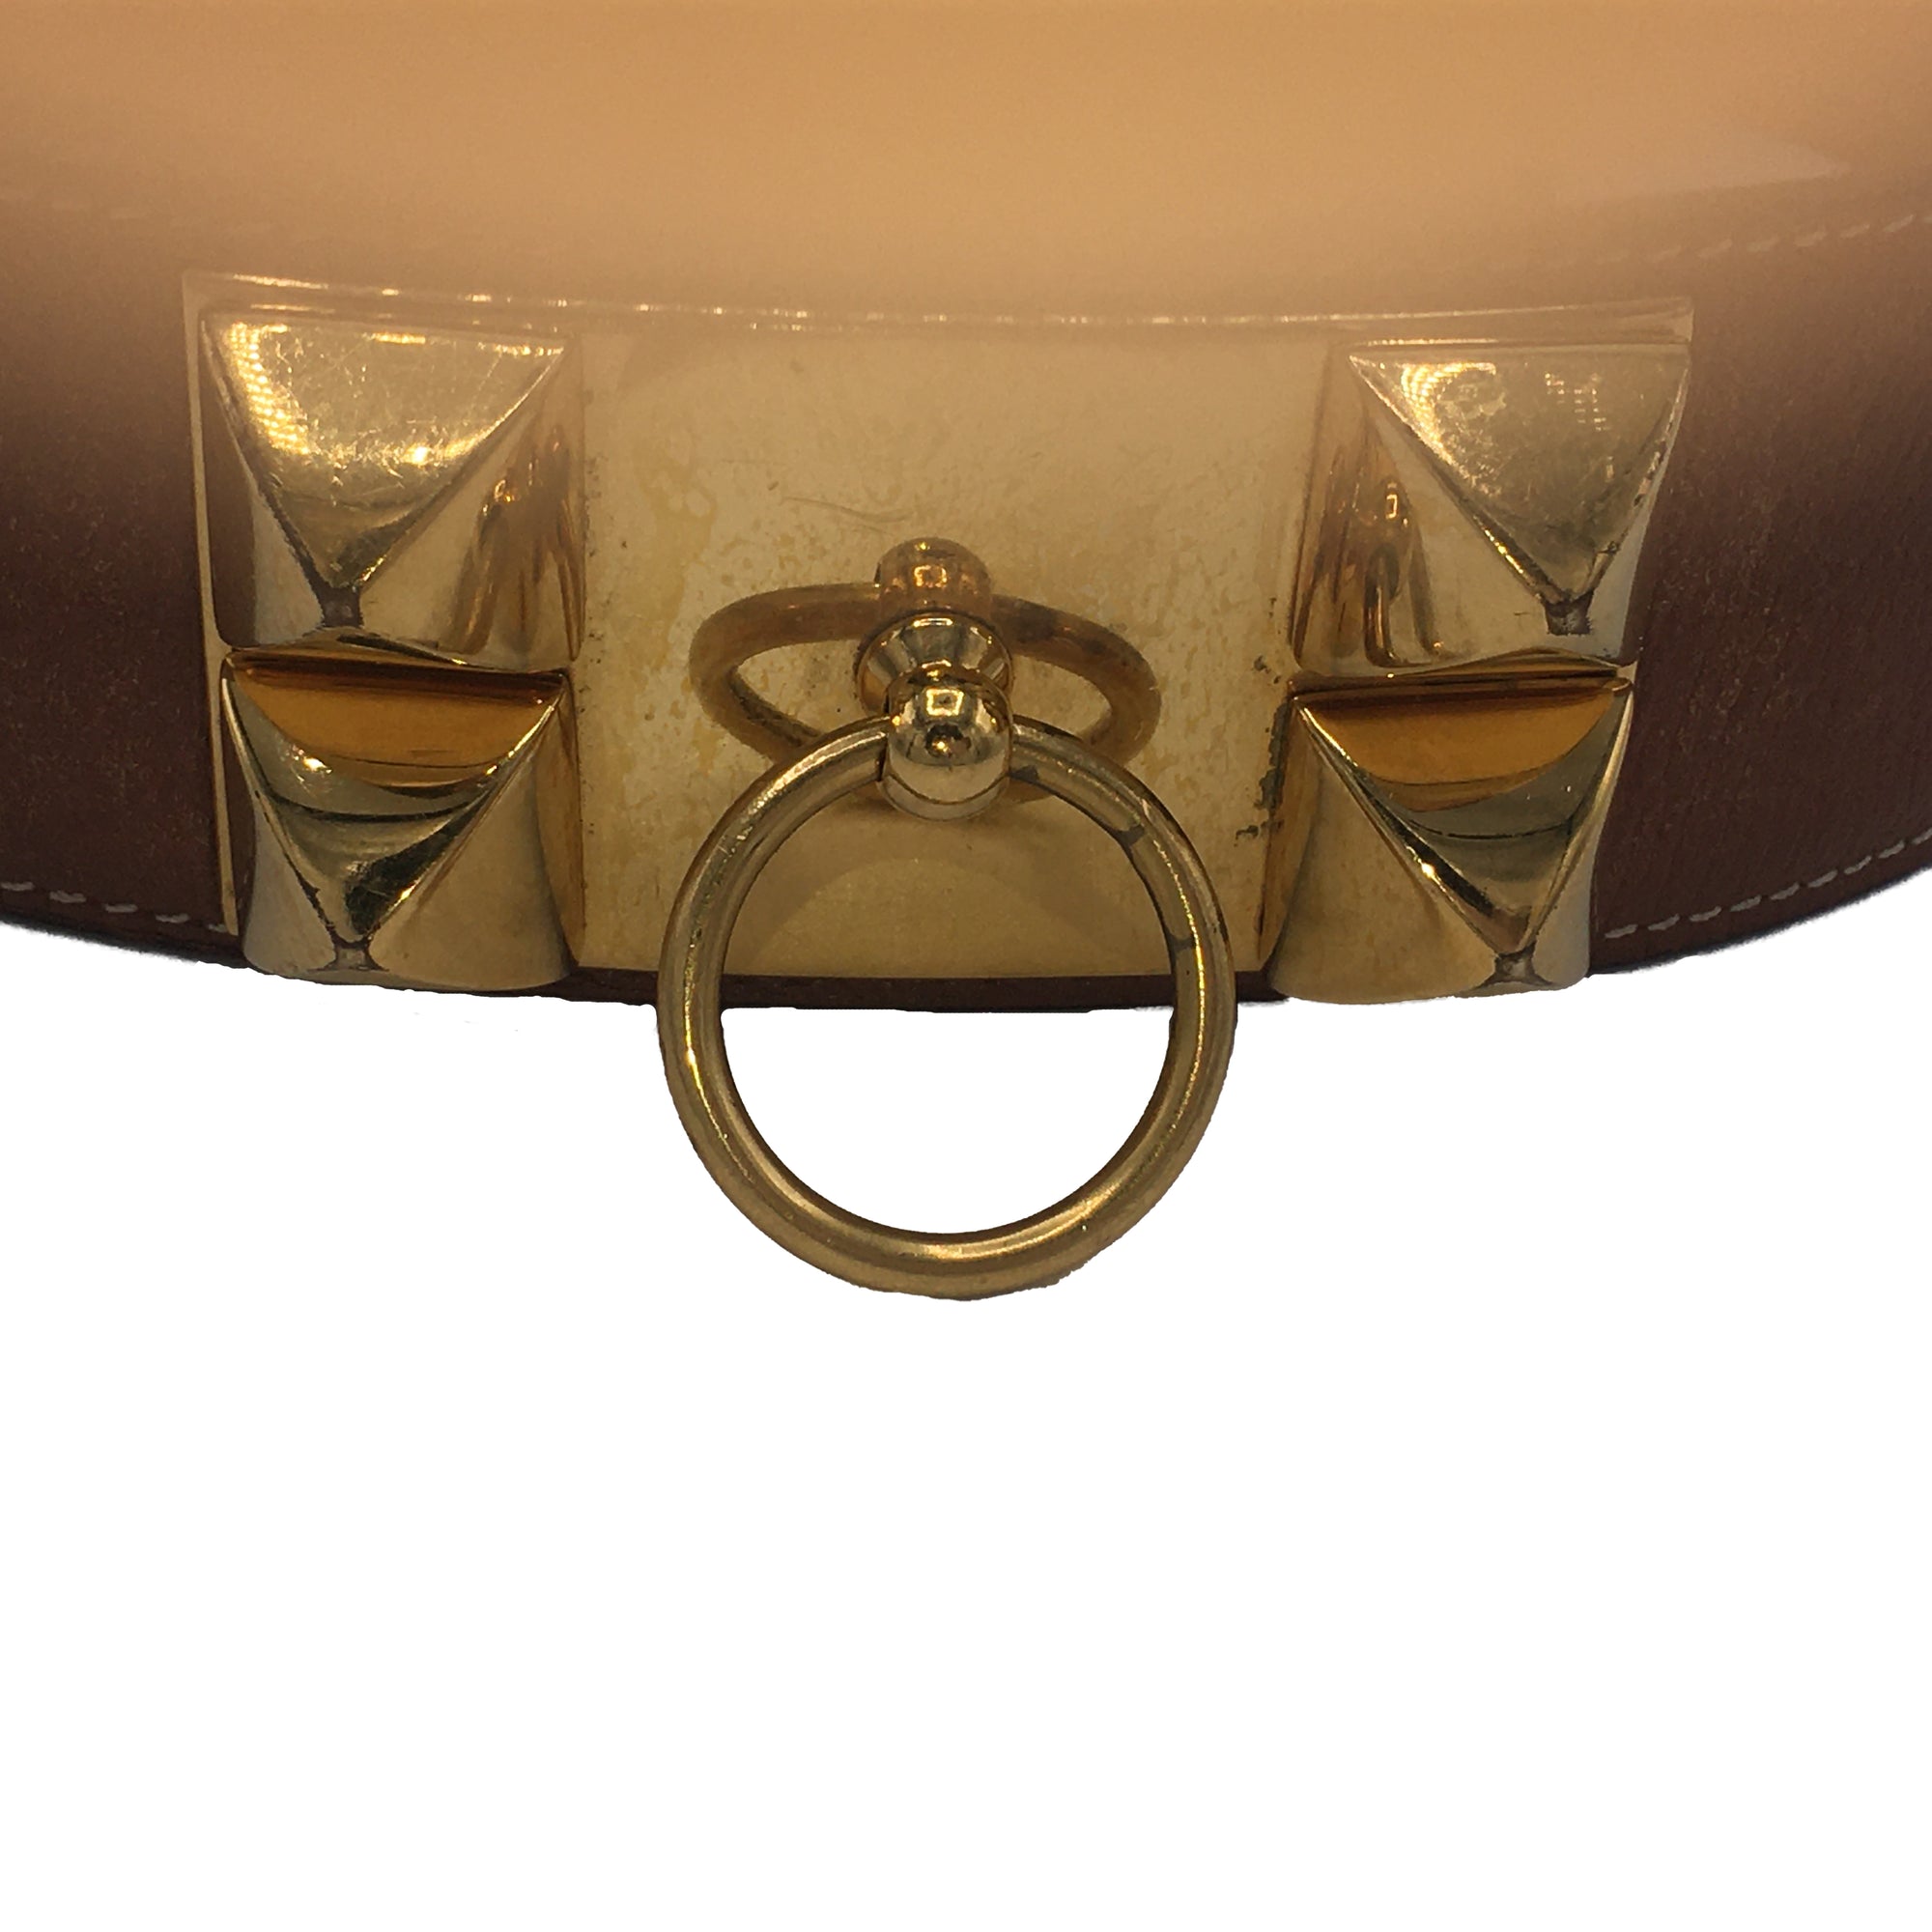 Hermès 42 mm Vintage Collier de Chien Belt - Brown Belts, Accessories -  HER564478